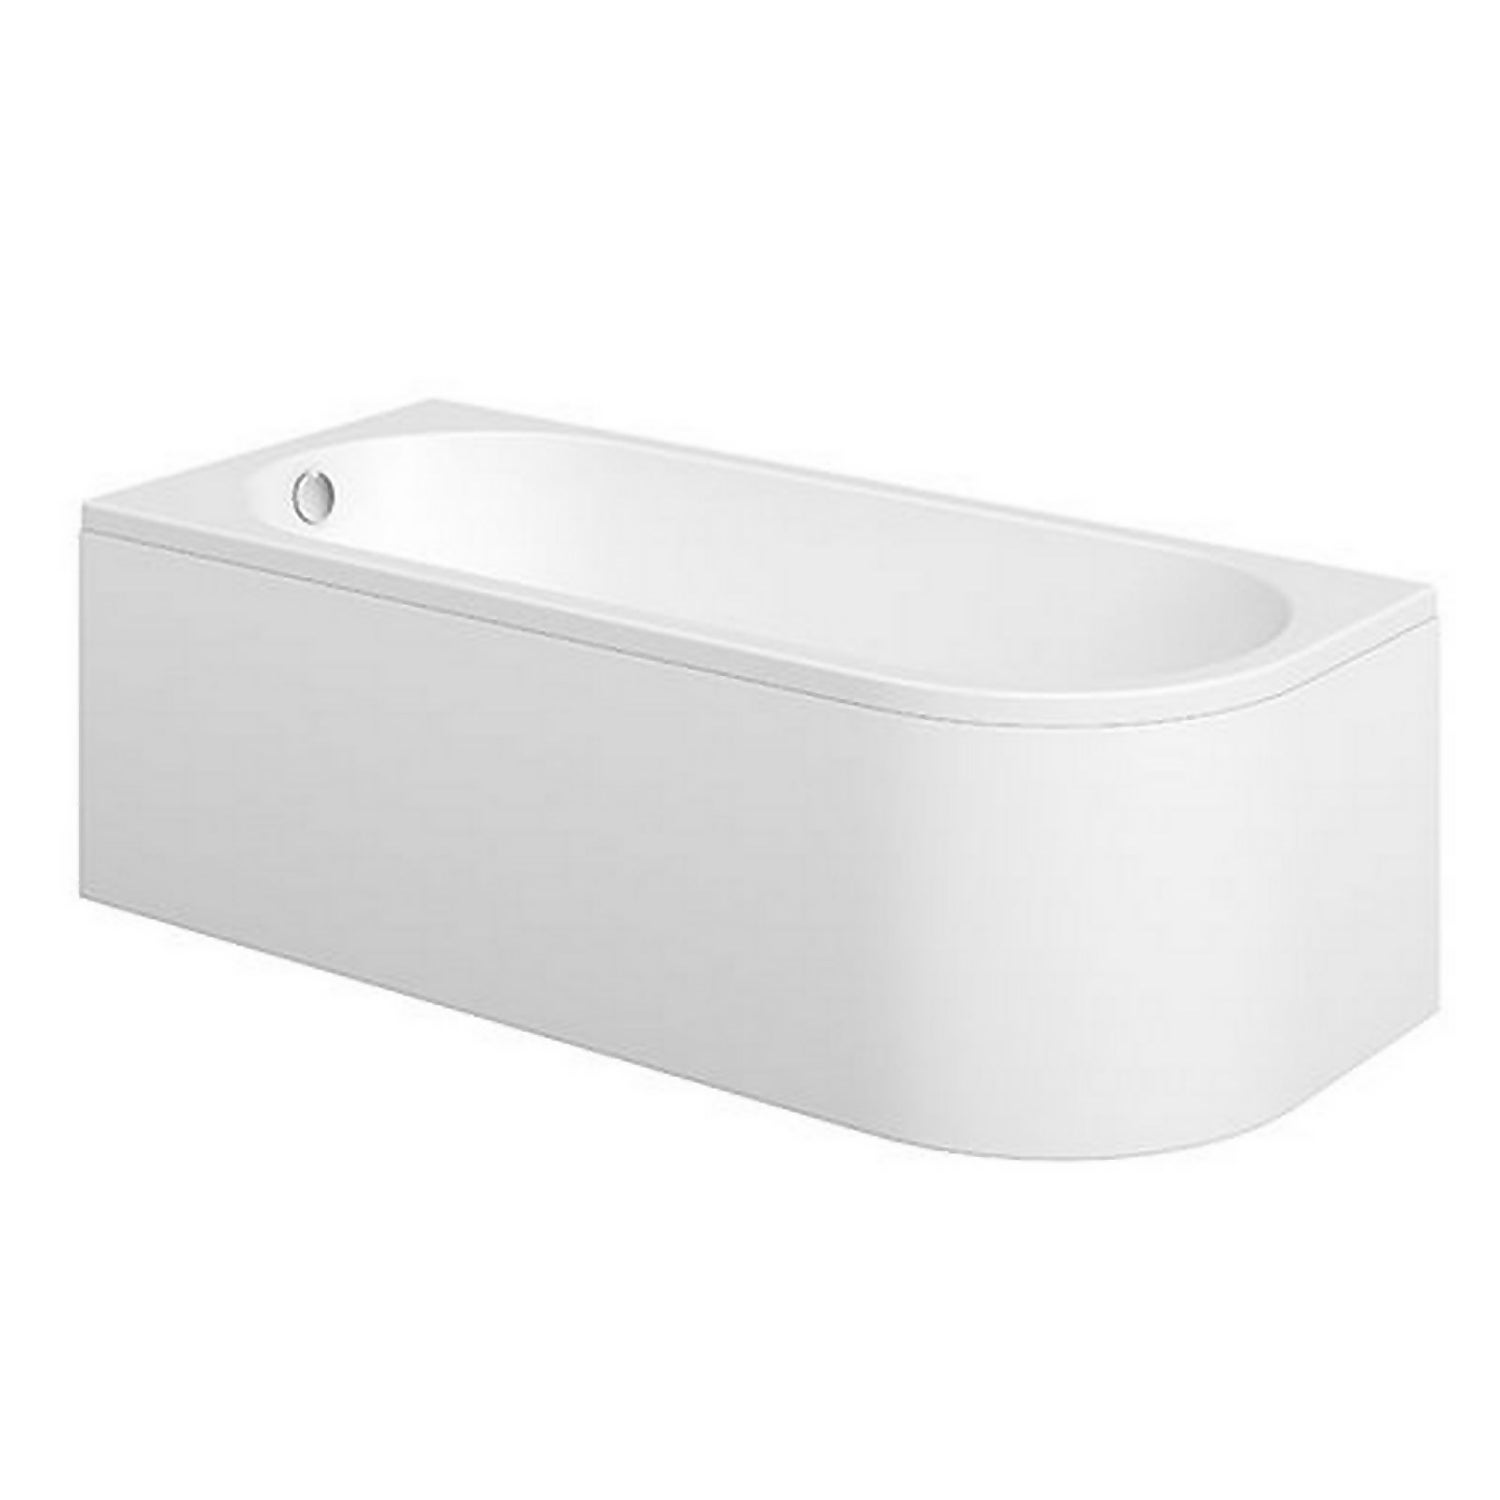 Indus White J Shaped Side Bath Panel - 1700mm